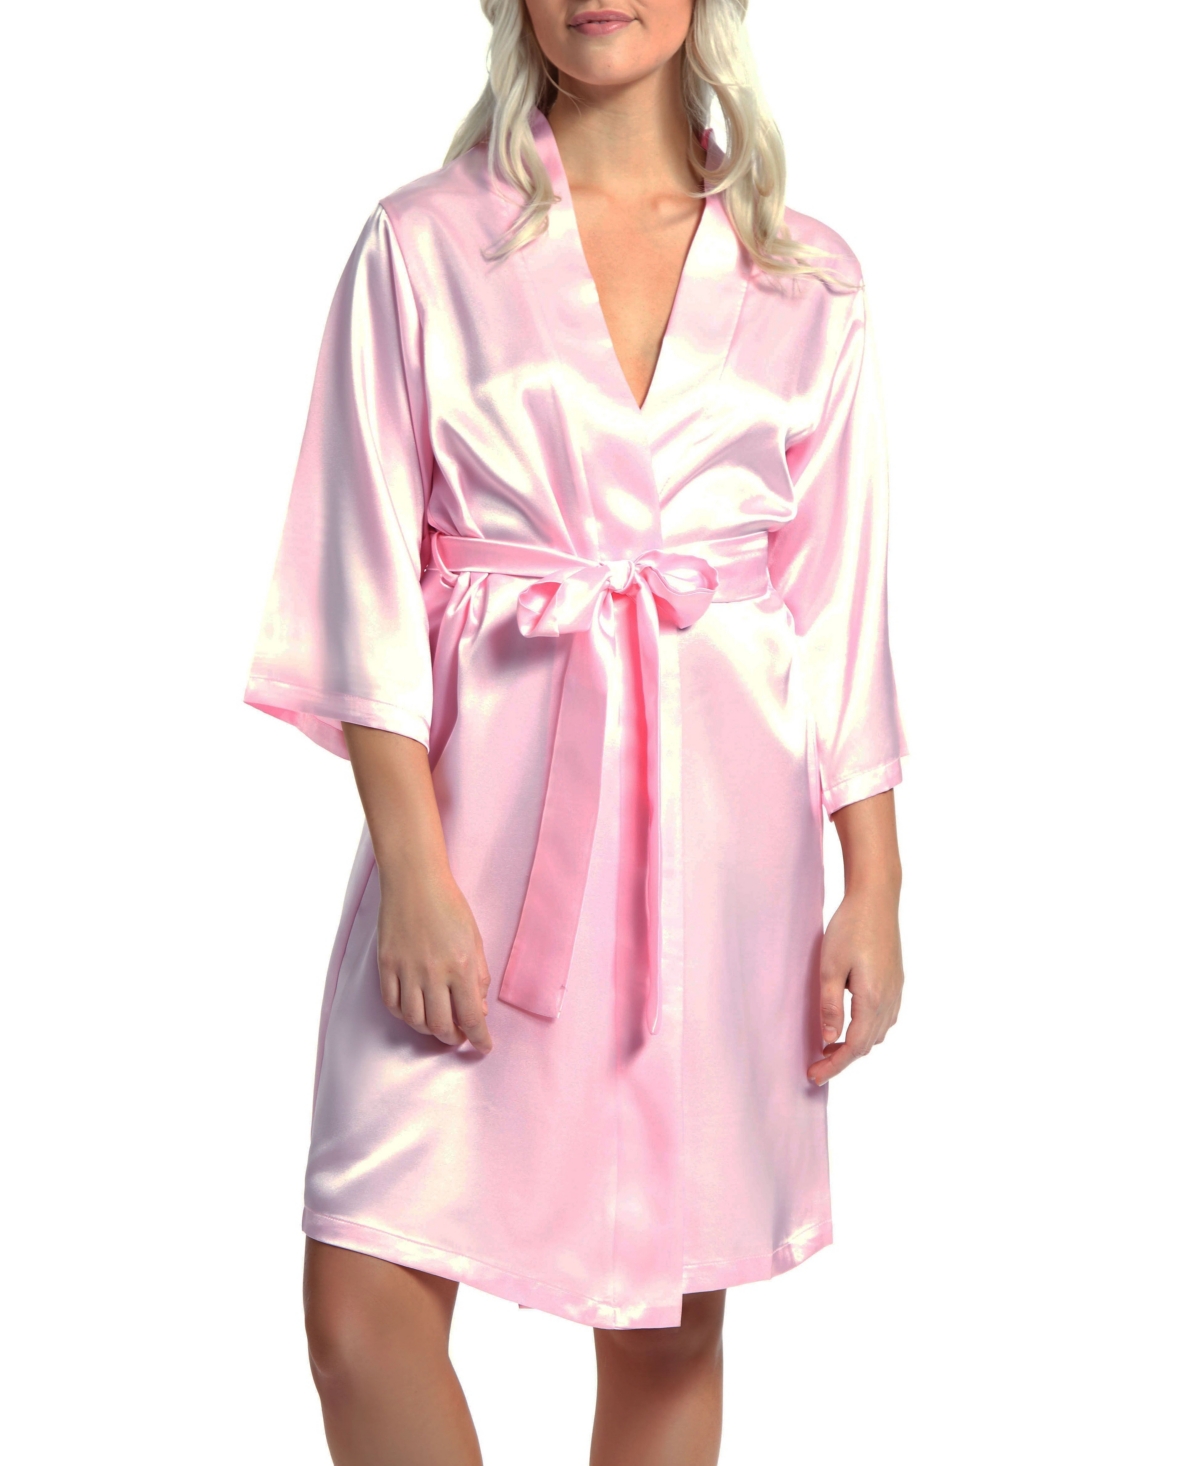 iCollection Women's Marina Lux 3/4 Sleeve Satin Lingerie Robe